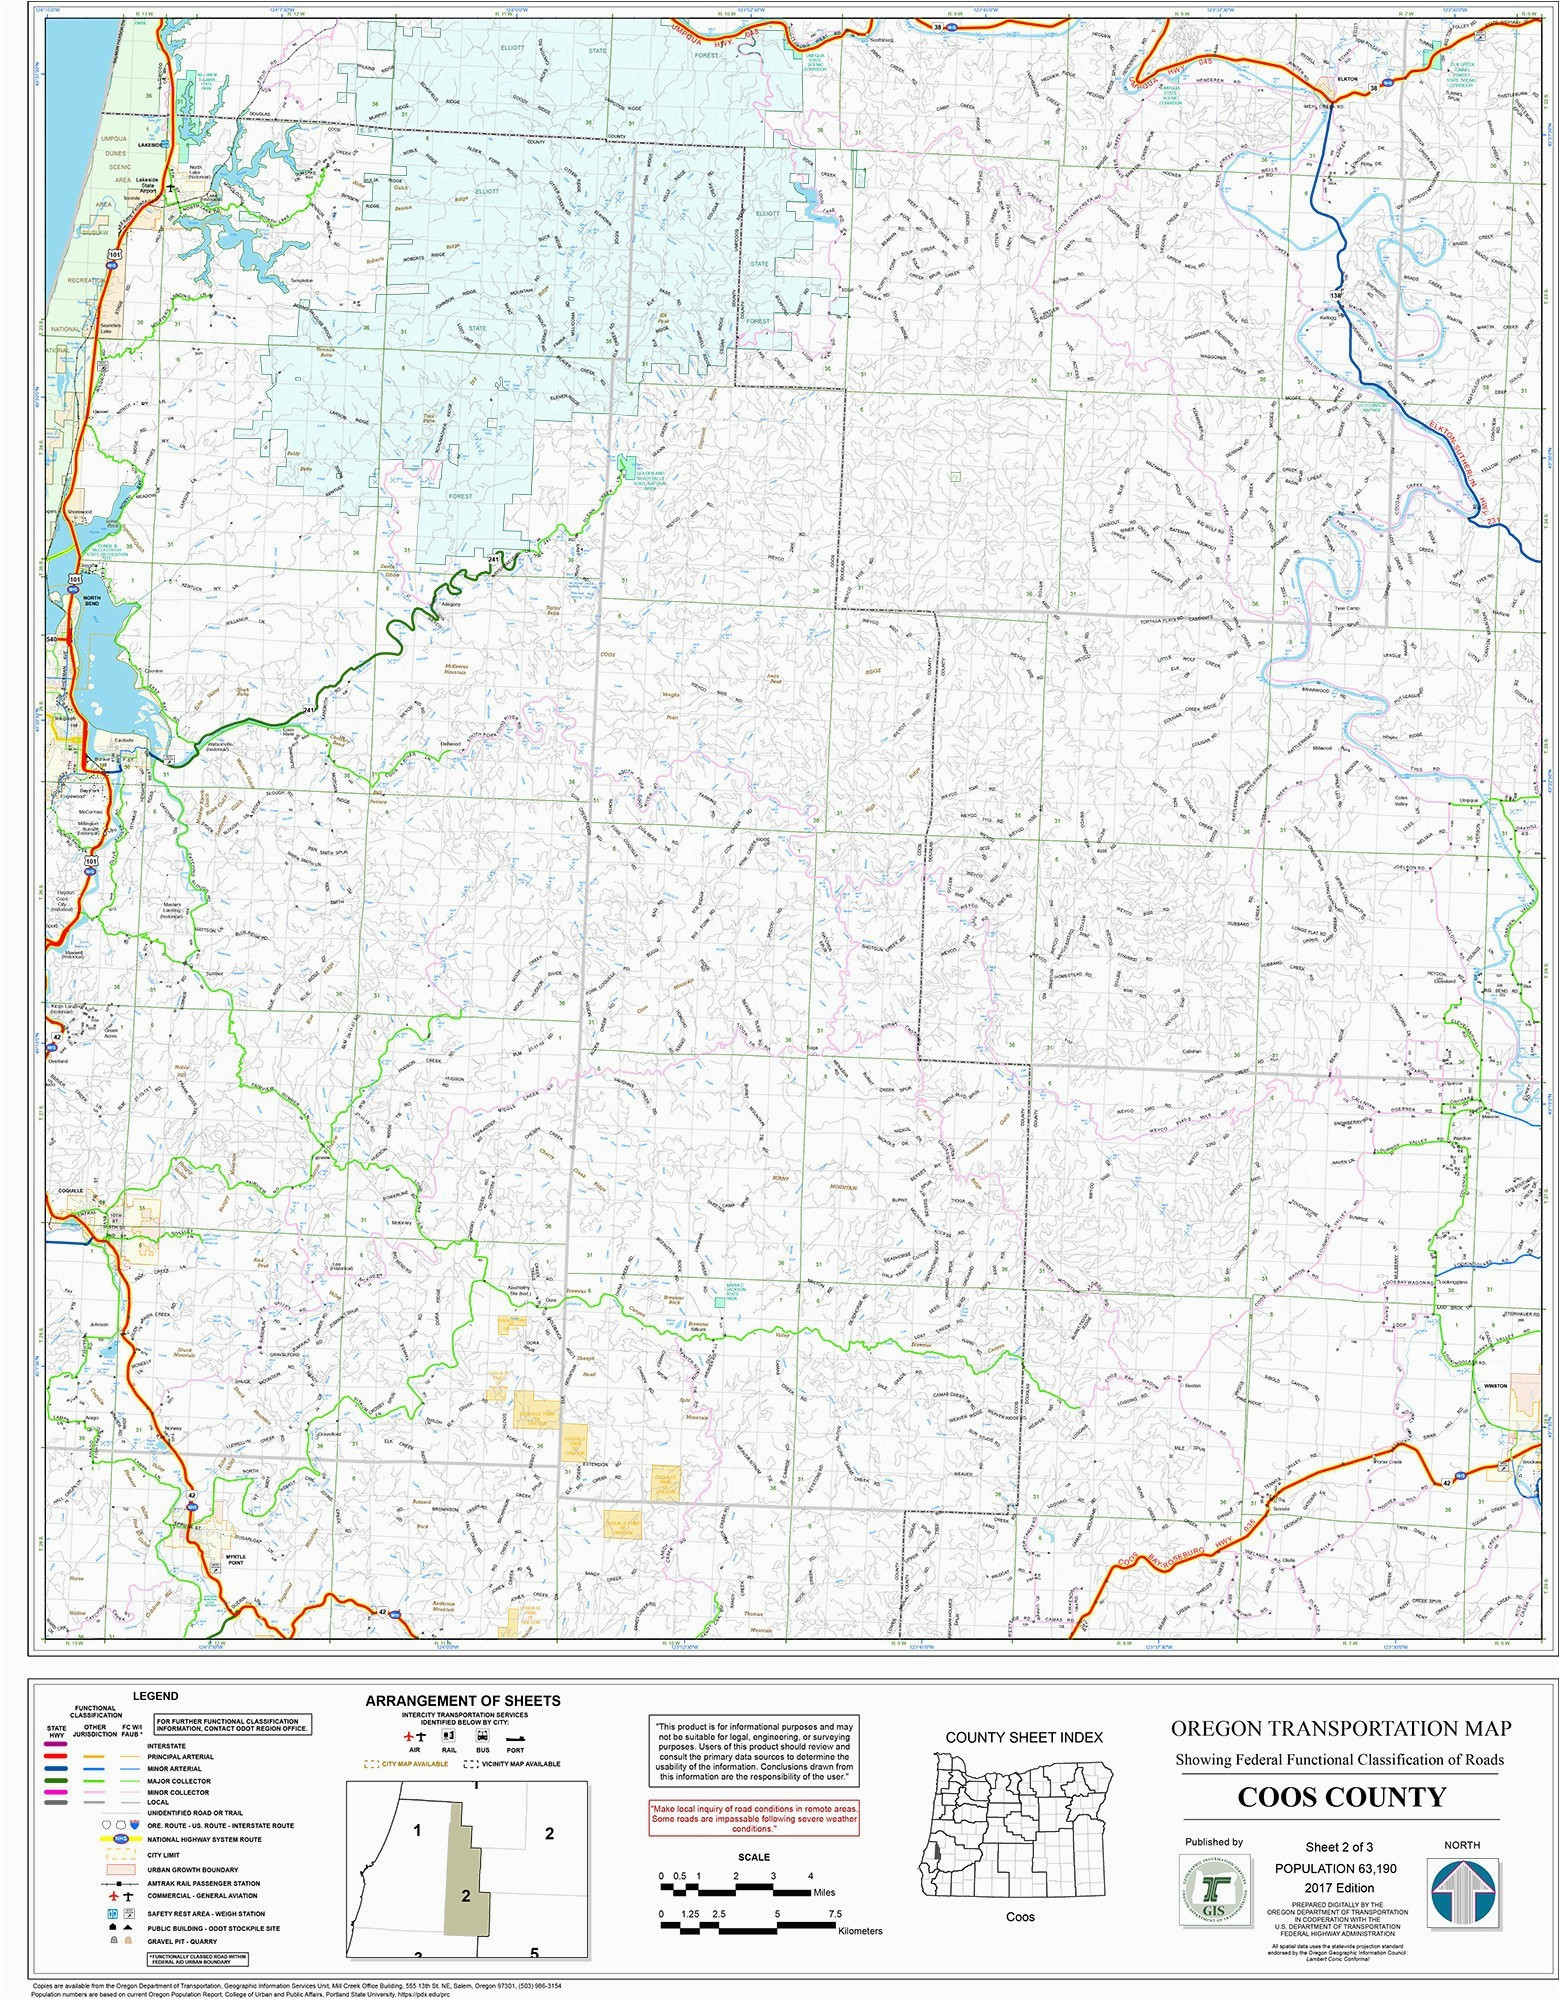 Medford oregon Google Maps Map Of Nw United States Refrence United States Google Maps